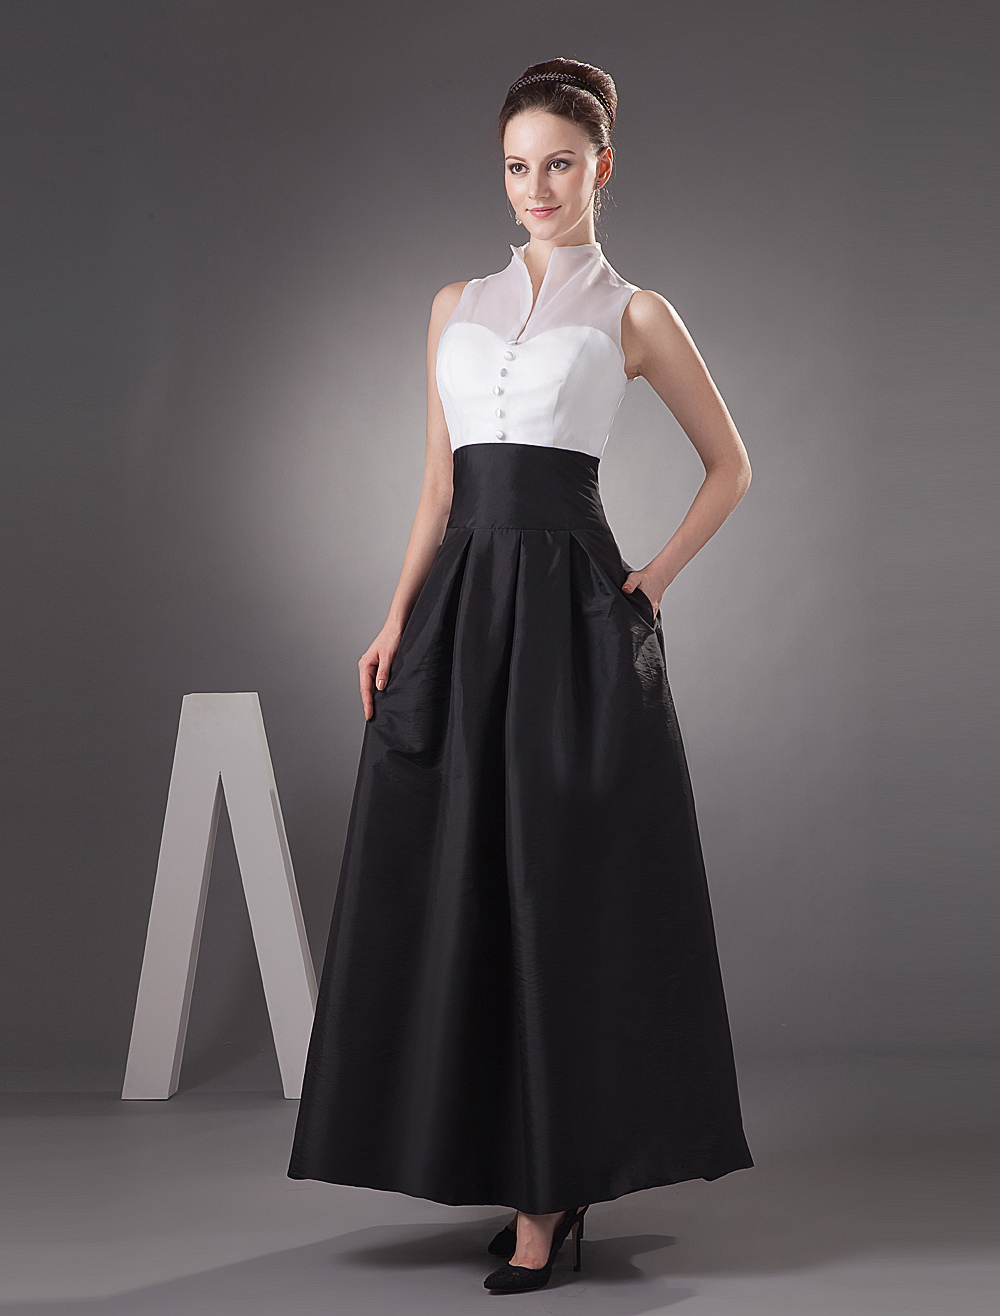 Black High Collar Taffeta Evening Dress | Zoombox